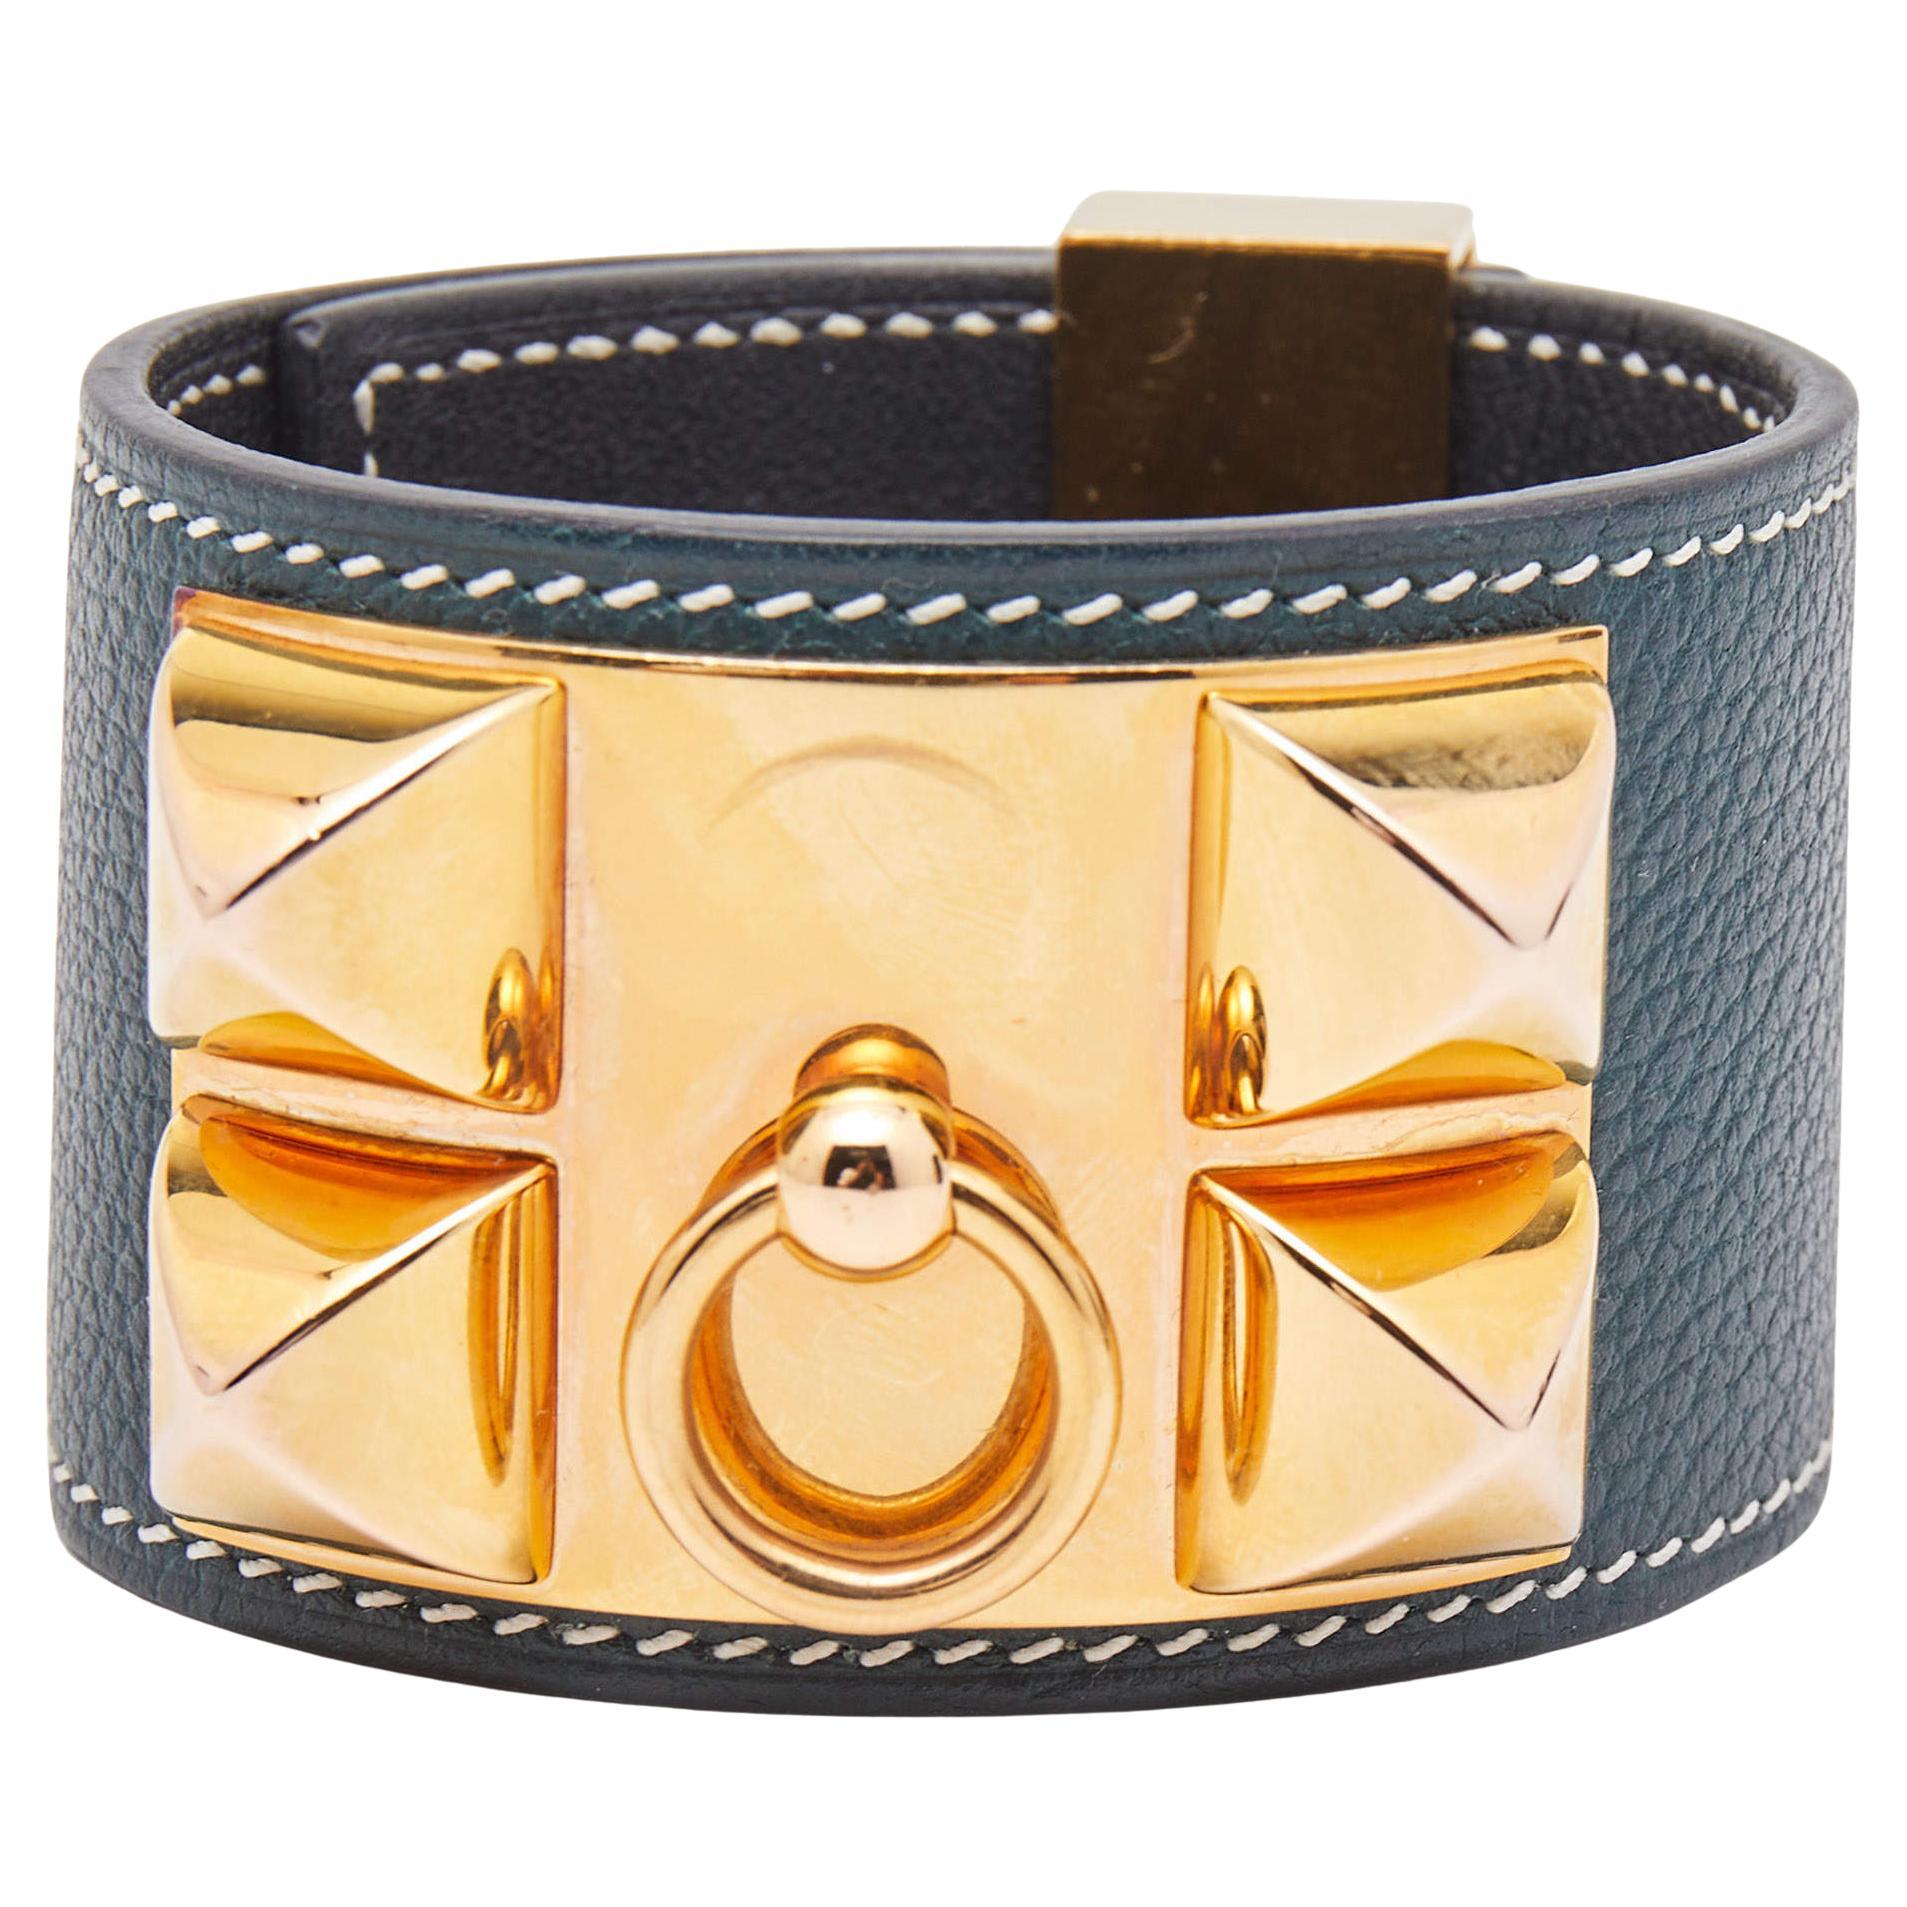 Hermes Collier de Chien Leather Gold Plated Cuff Bracelet